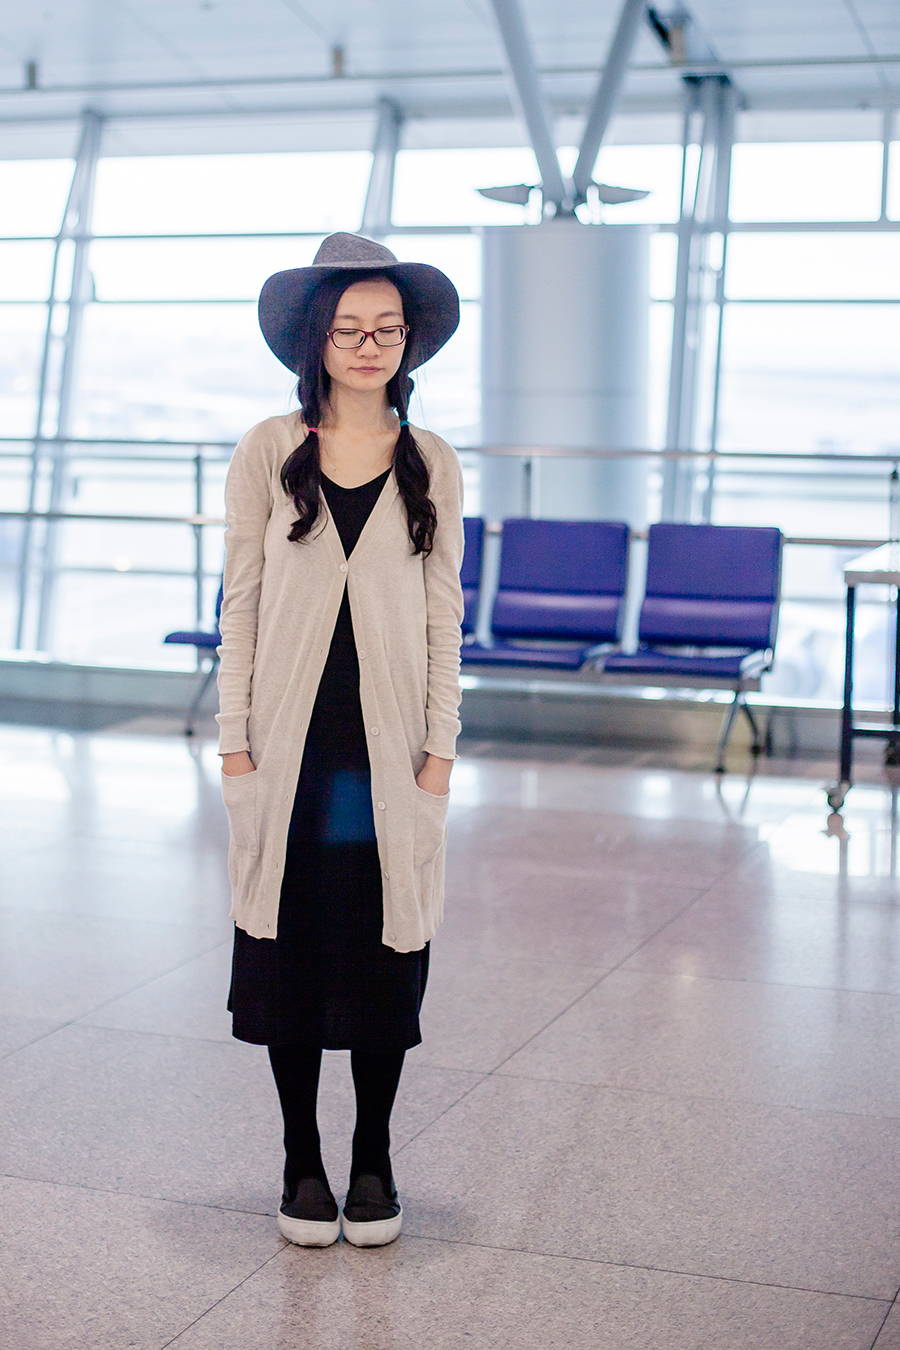 Airport outfit: Zara long cardigan, GU wool hat, Spurr shoes.